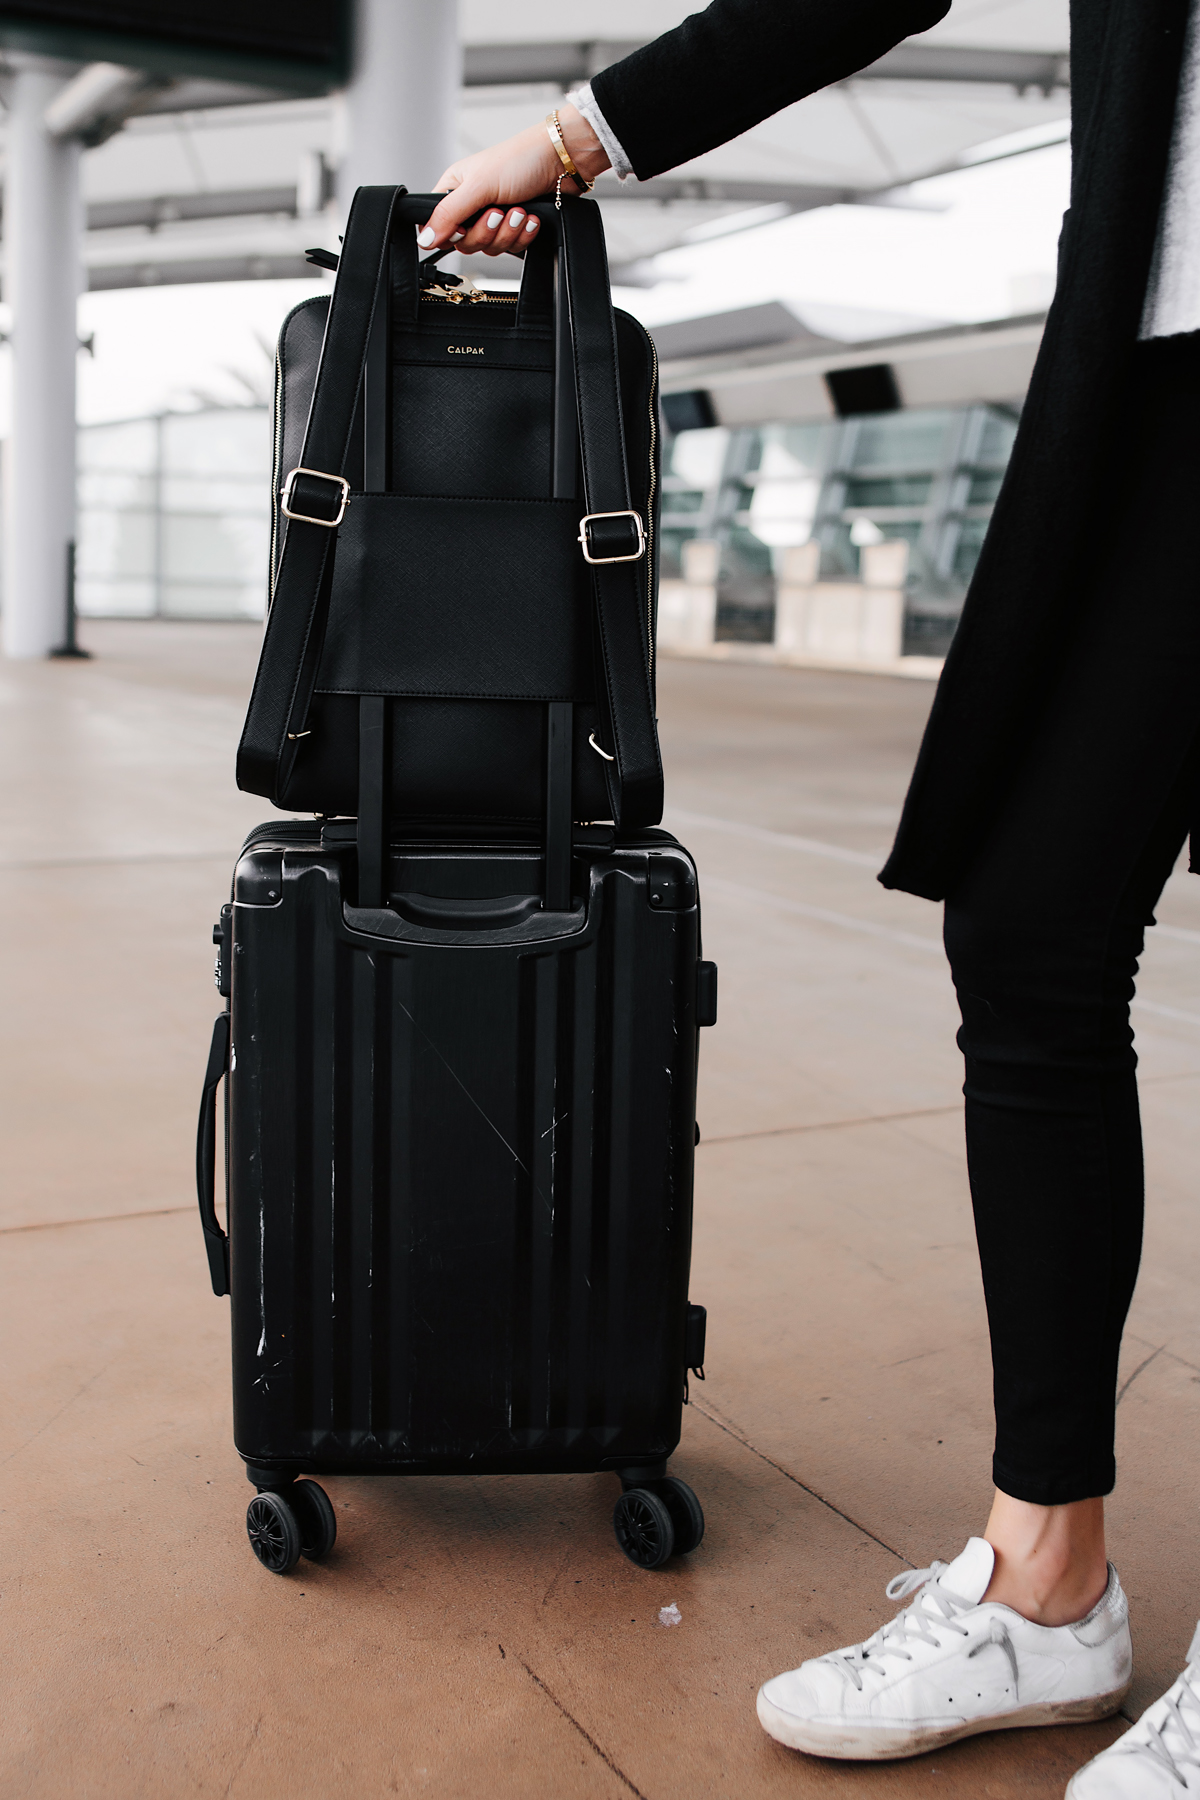 Calpak Kaya Black Backpack Calpak Black Luggage Airport Style